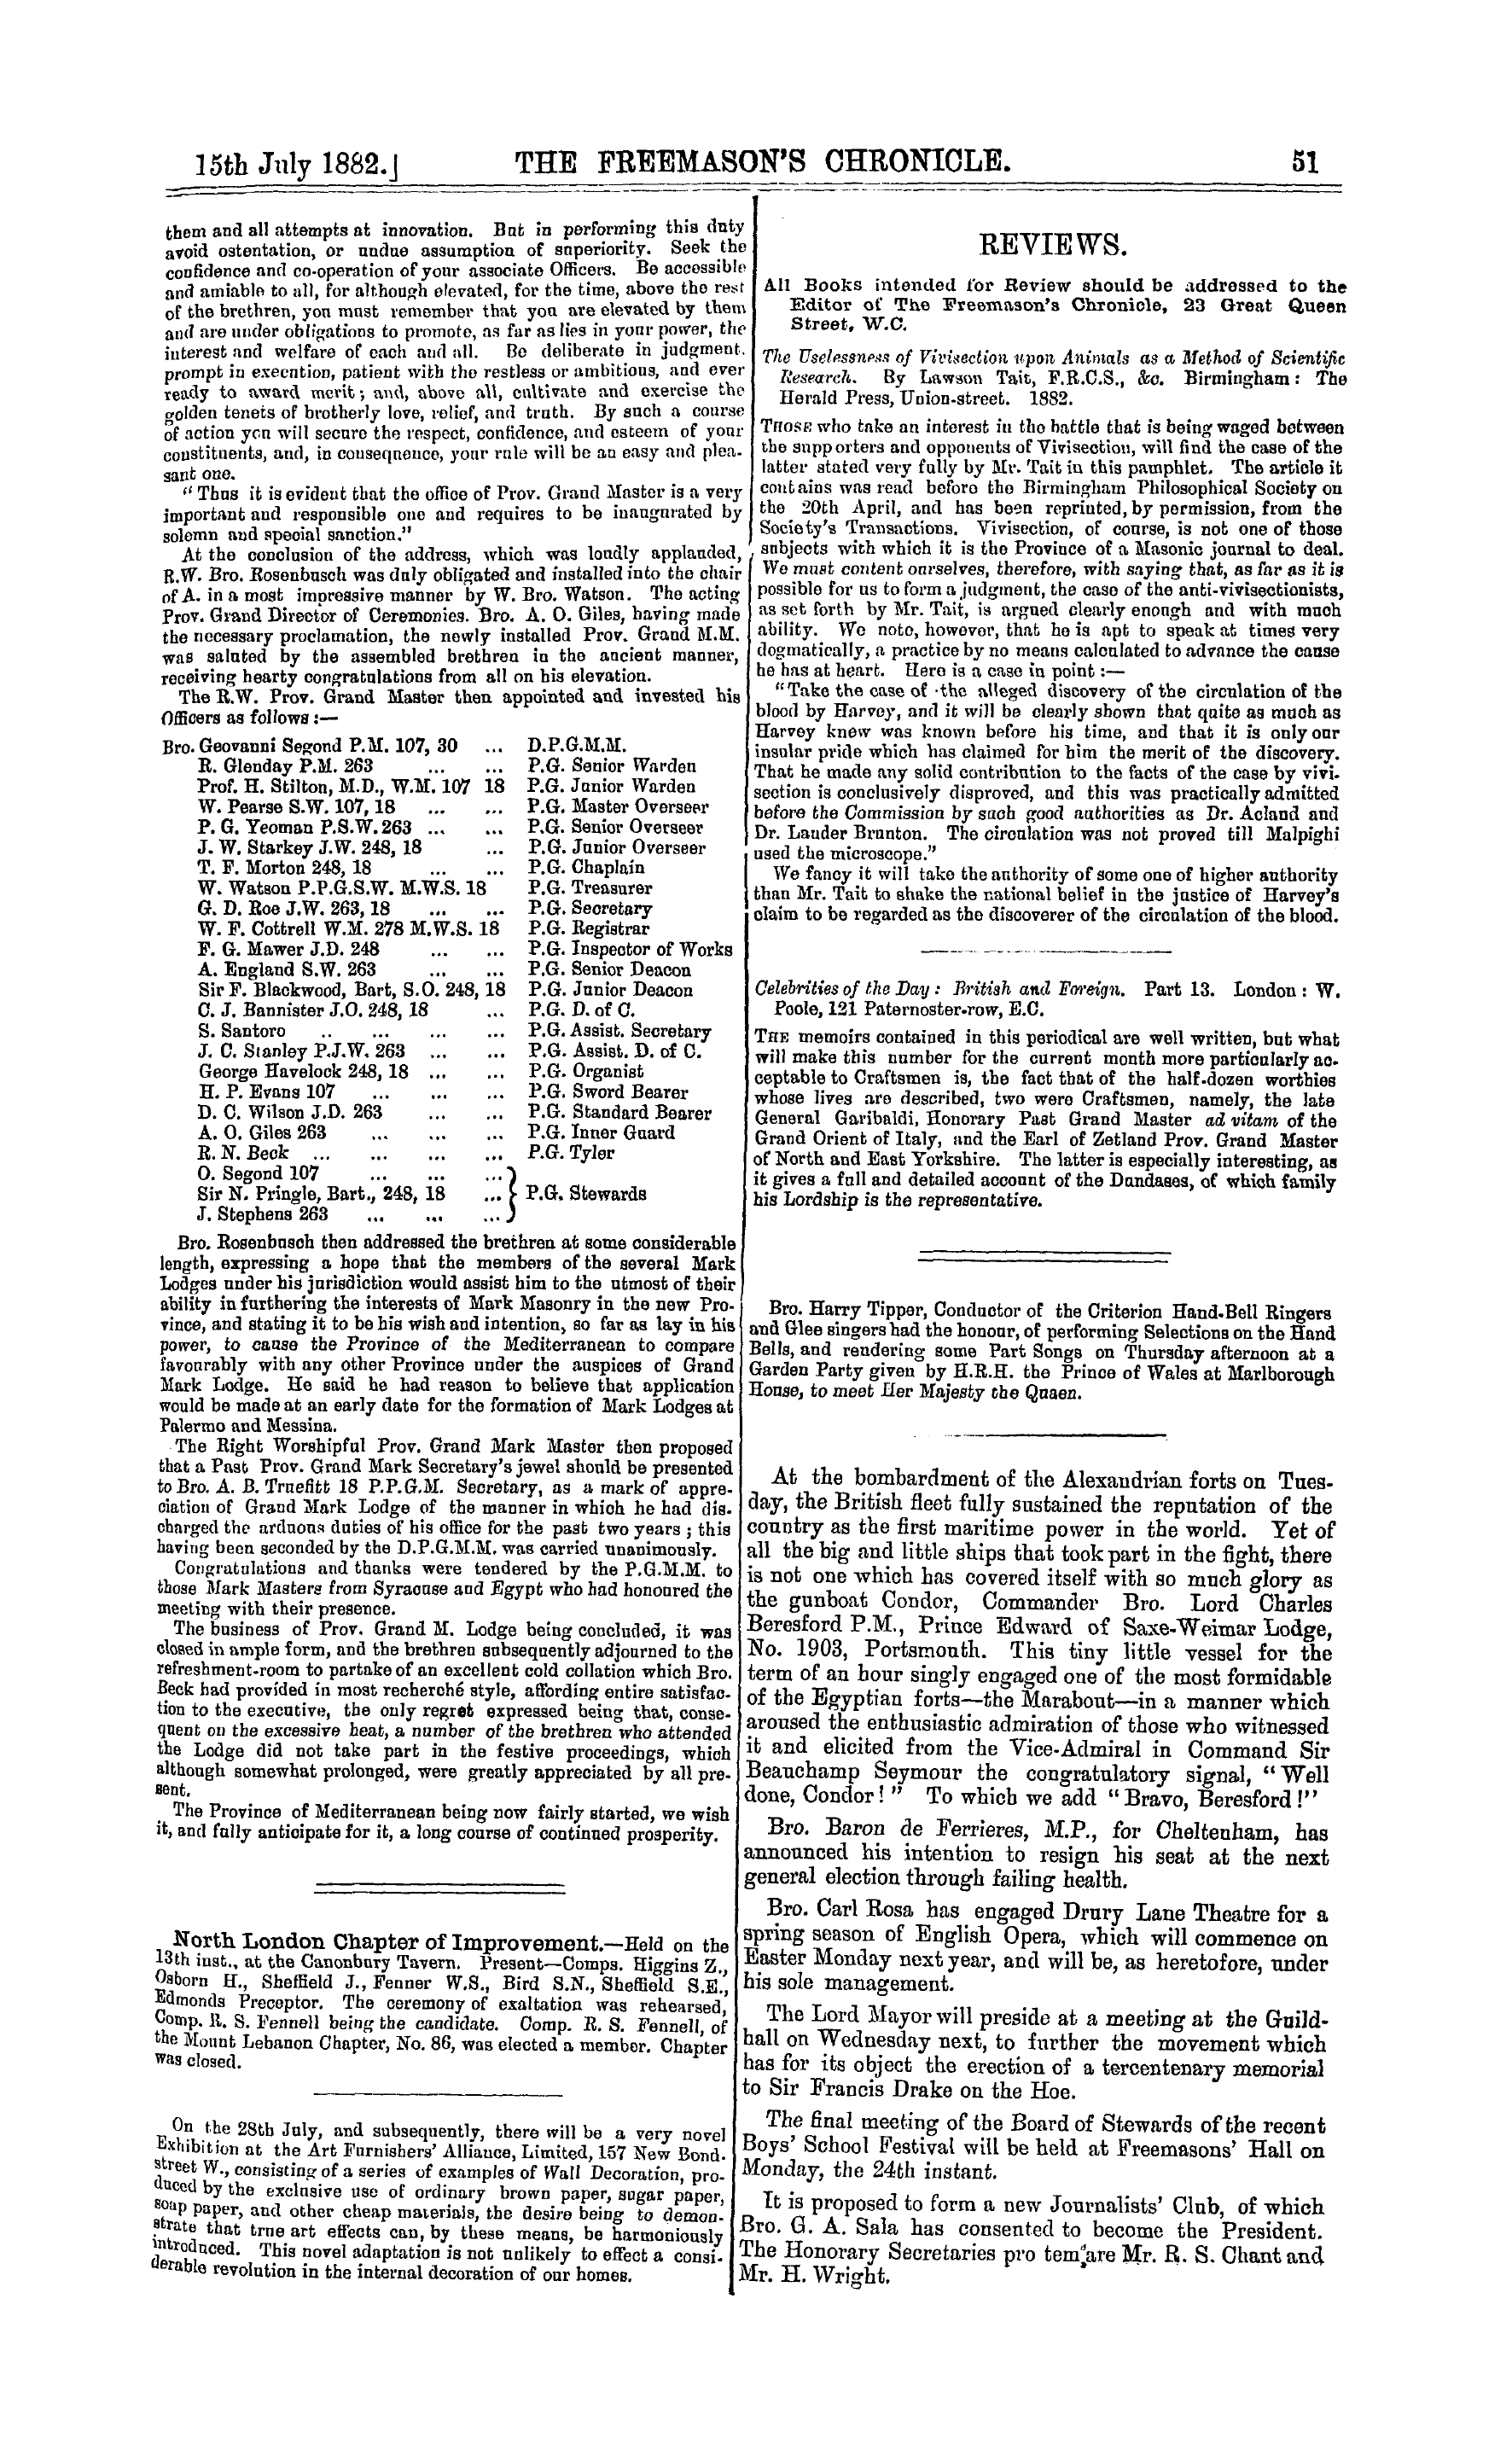 The Freemason's Chronicle: 1882-07-15 - Reviews.